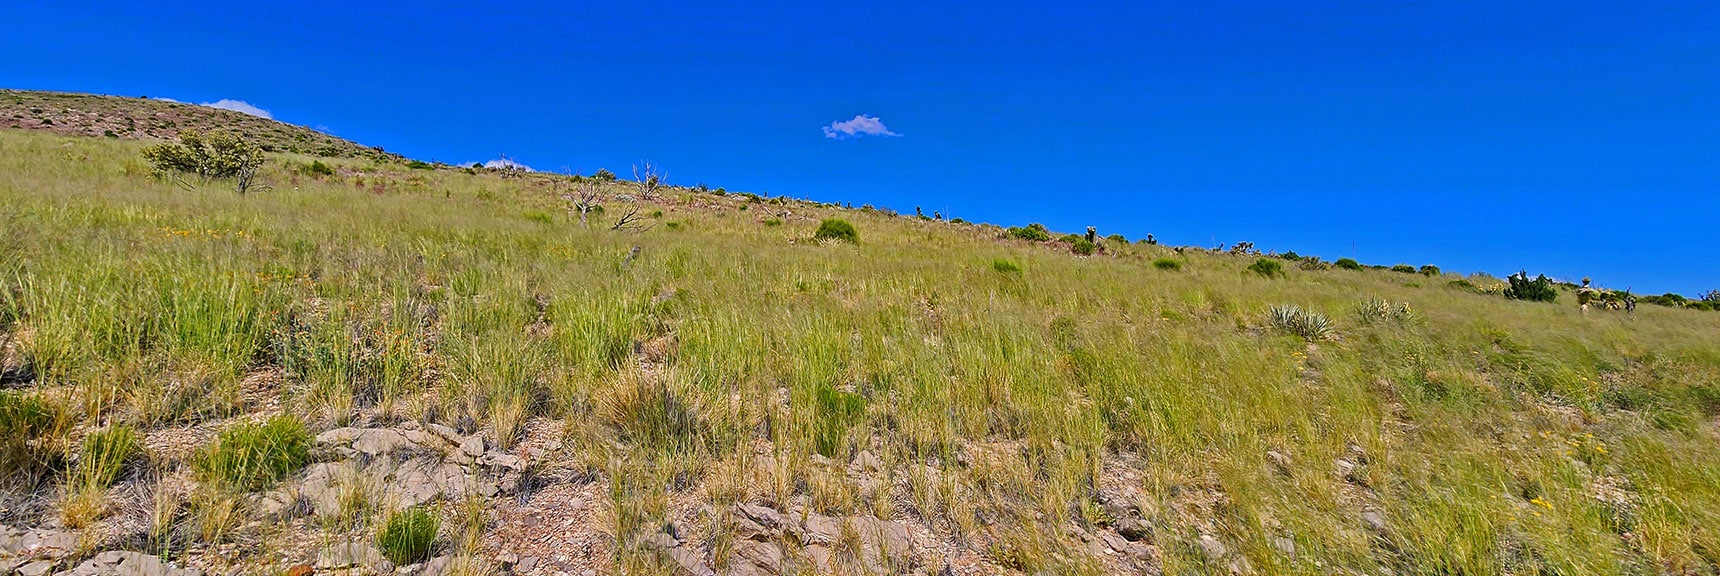 Tall Grass Waving in the Wind. Looking Back Across Area Just Traversed | Mt Wilson to Hidden Peak | Upper Crest Ridgeline | Rainbow Mountain Wilderness, Nevada